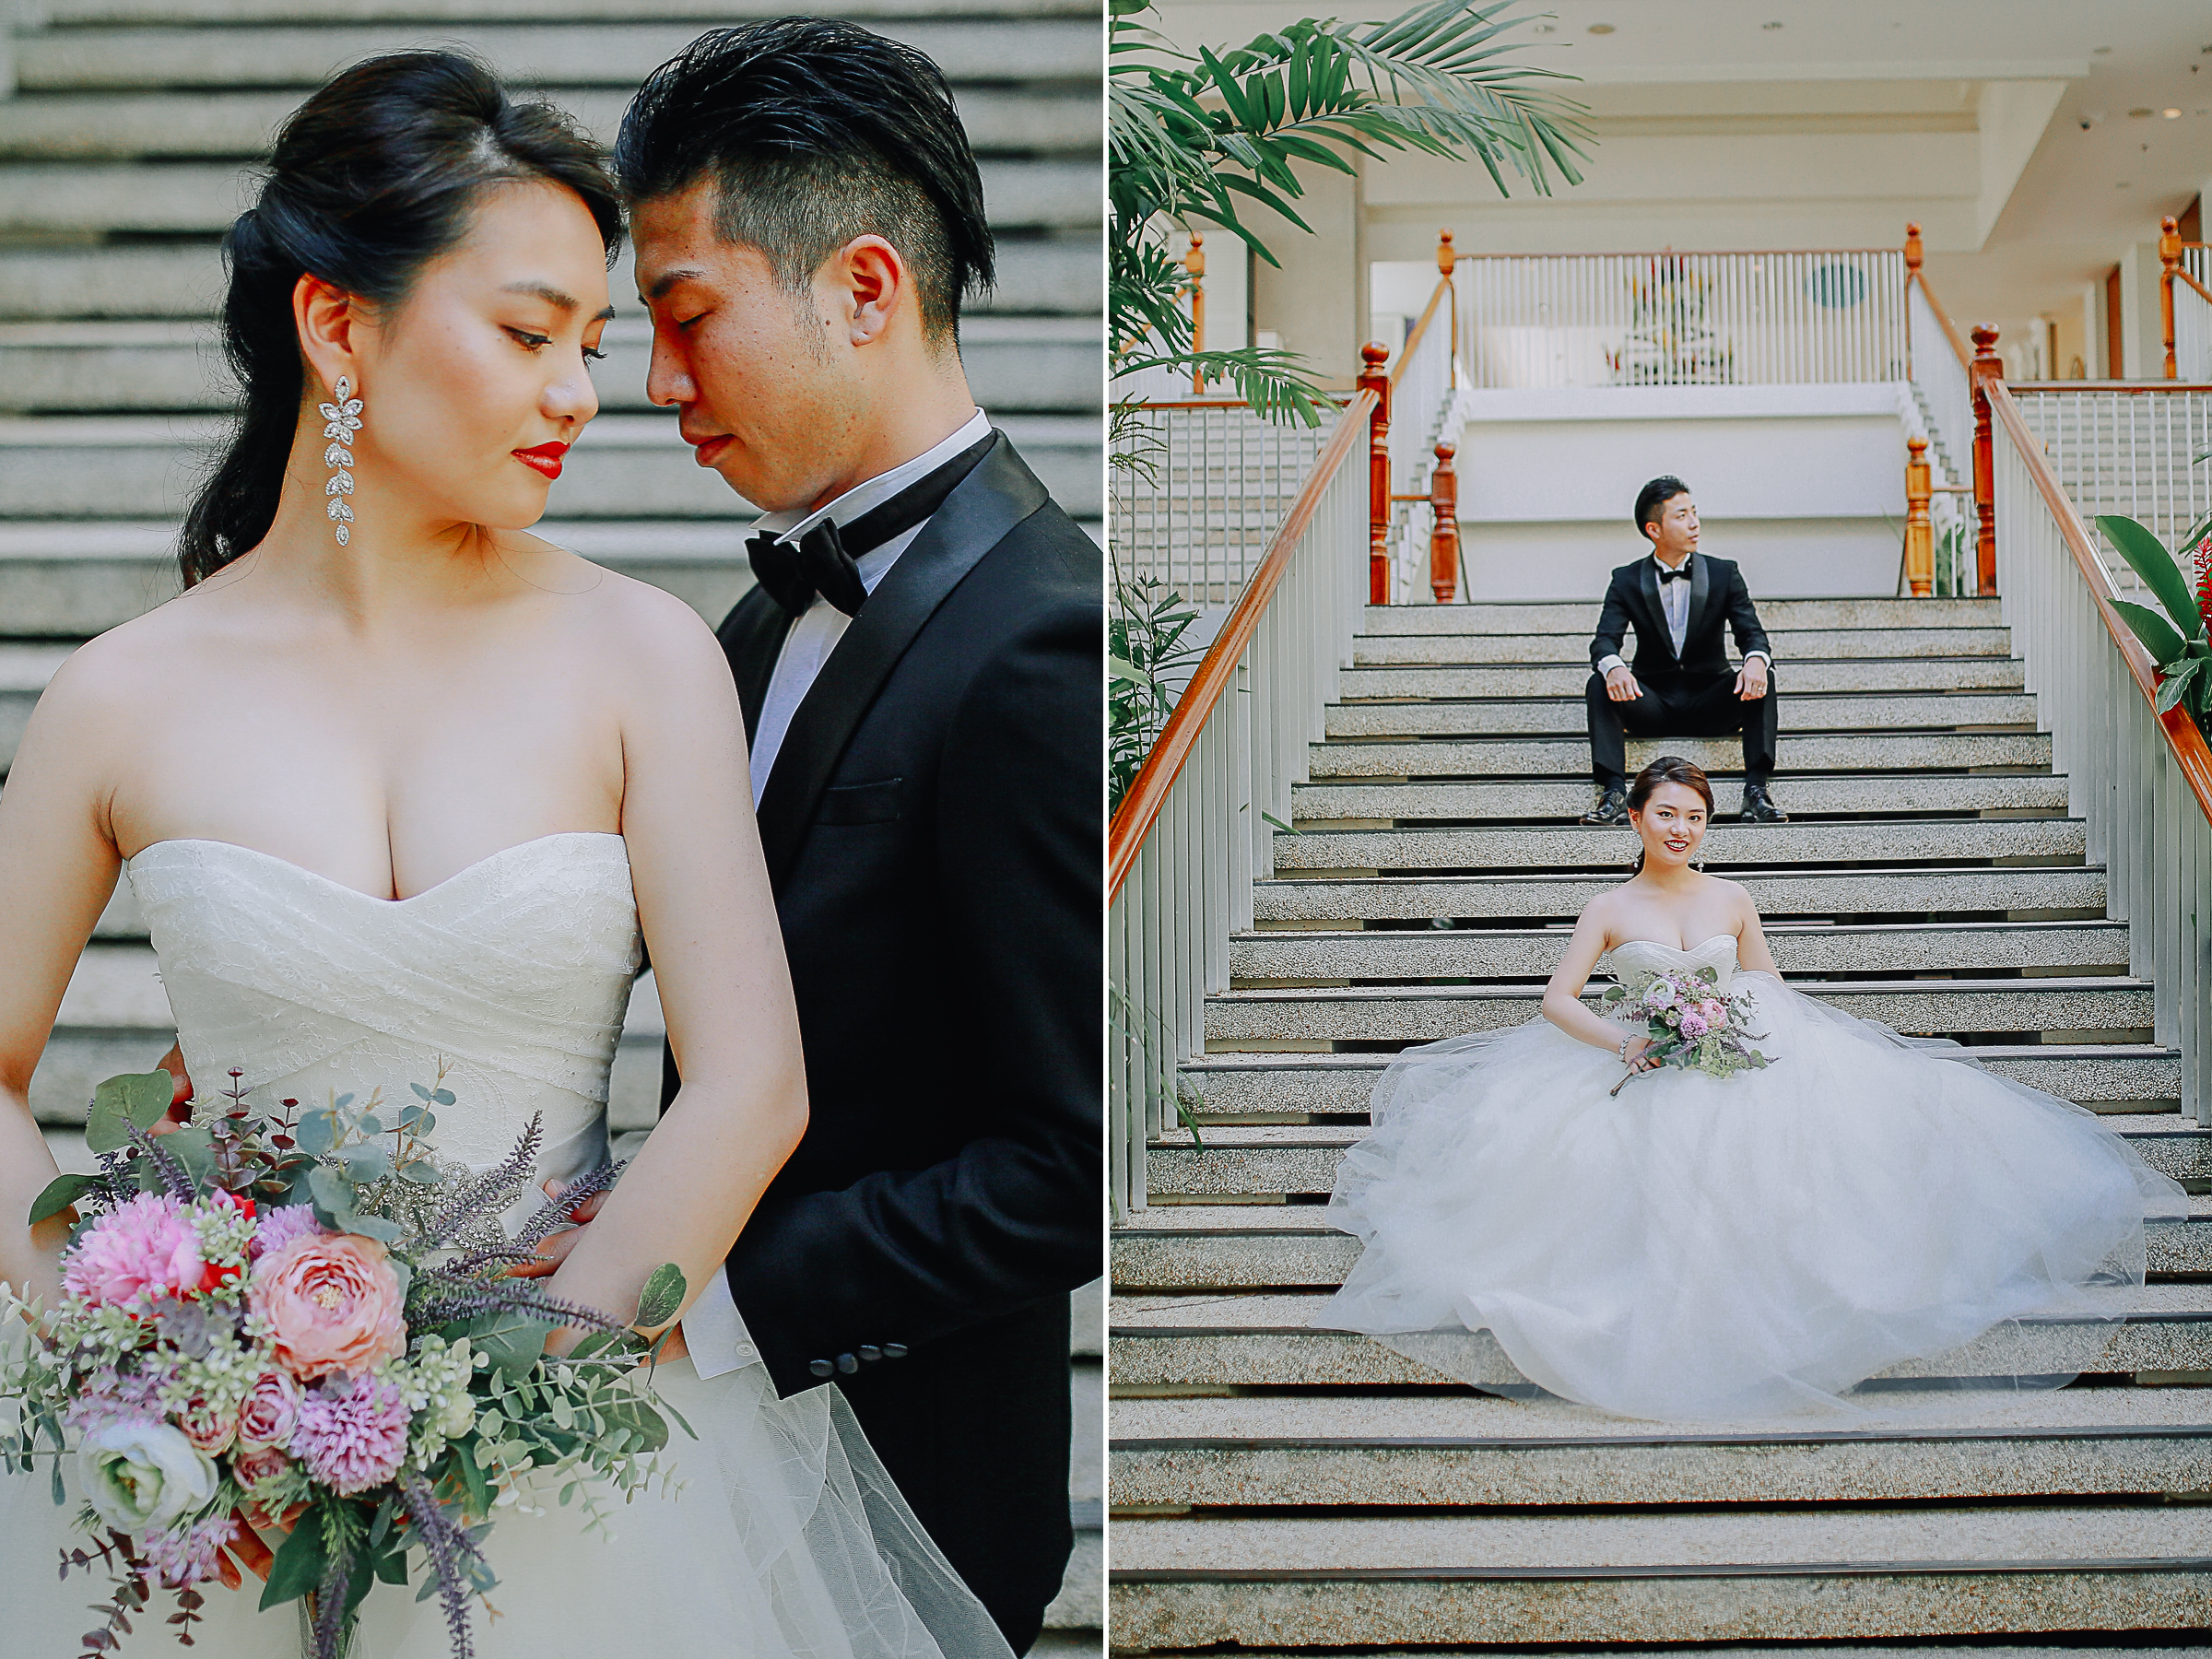 11 - Shojiro & Hiroko's Shangrila Mactan Cebu Intimate Wedding